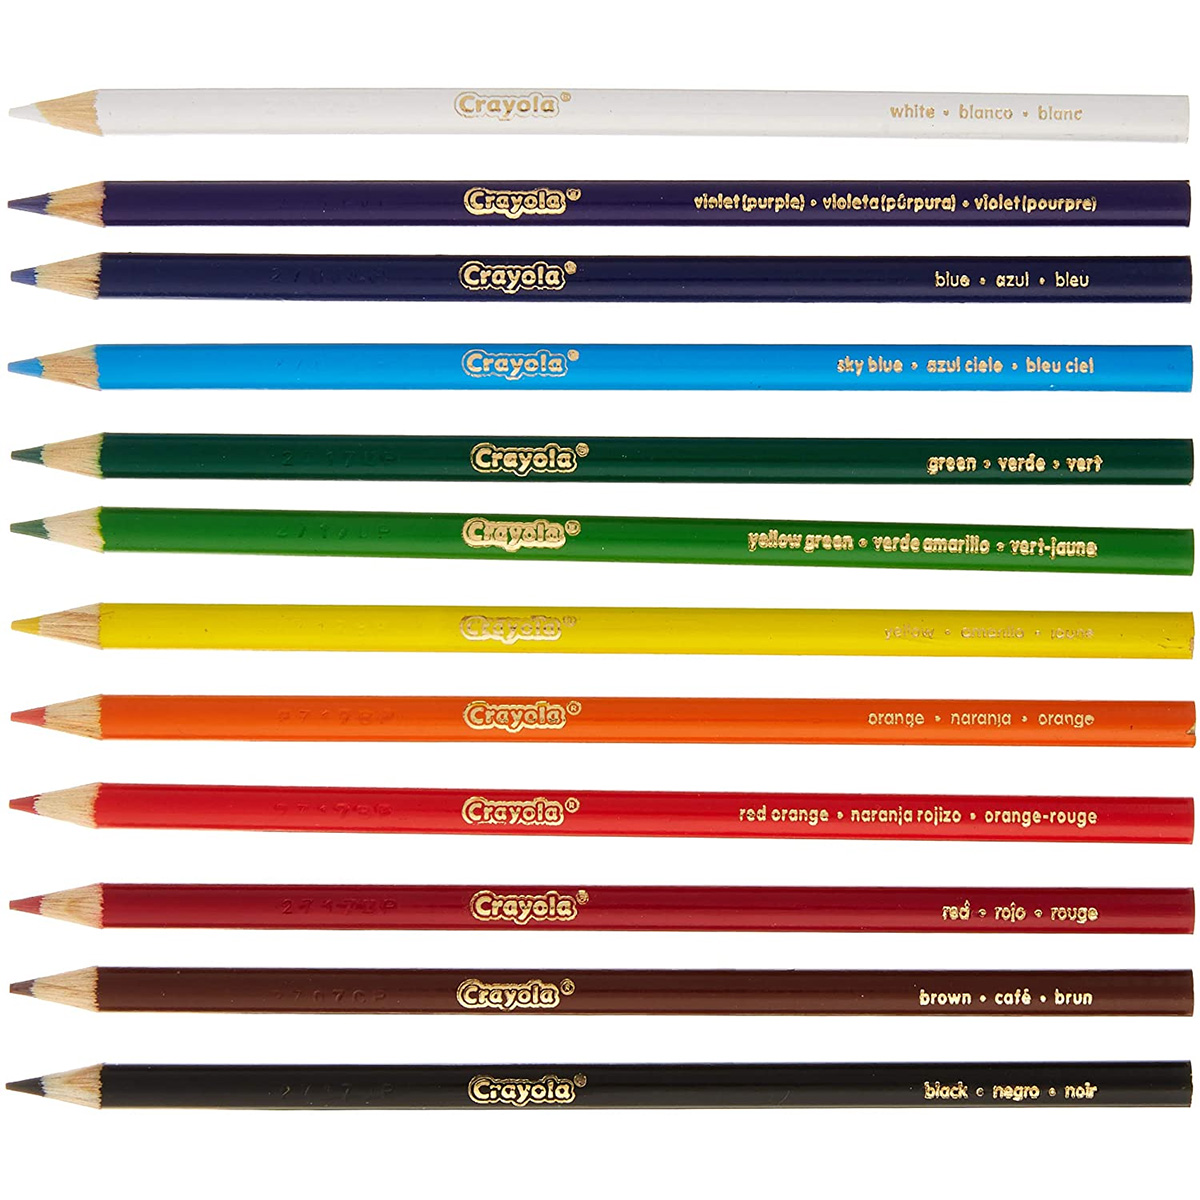 https://theinkstone.com/wp-content/uploads/2020/09/Crayola-colored-pencils-12-set-4.jpg